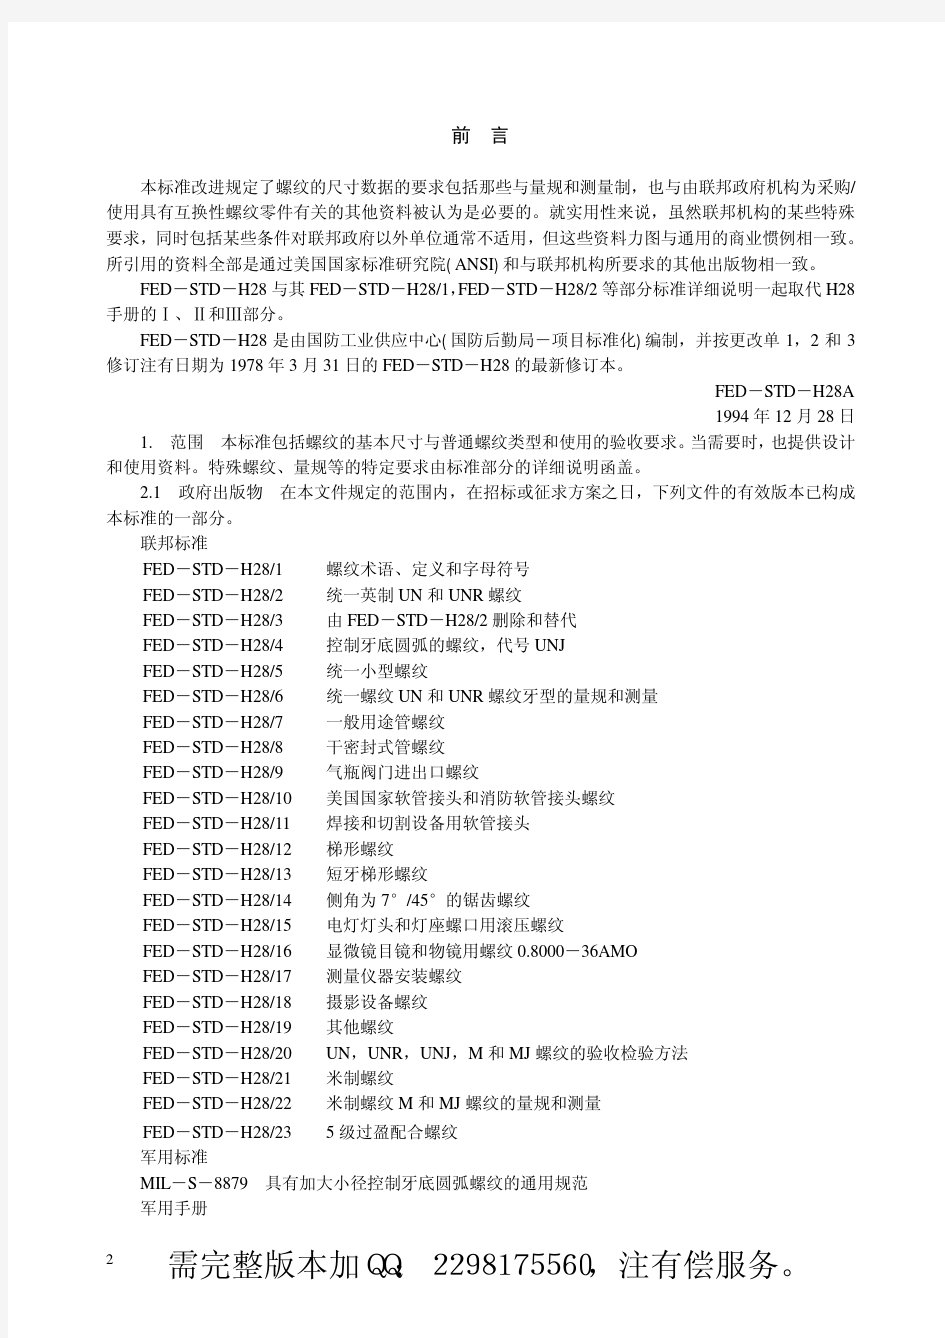 MIL-STD-H28A 美国联邦螺纹标准手册(中文)